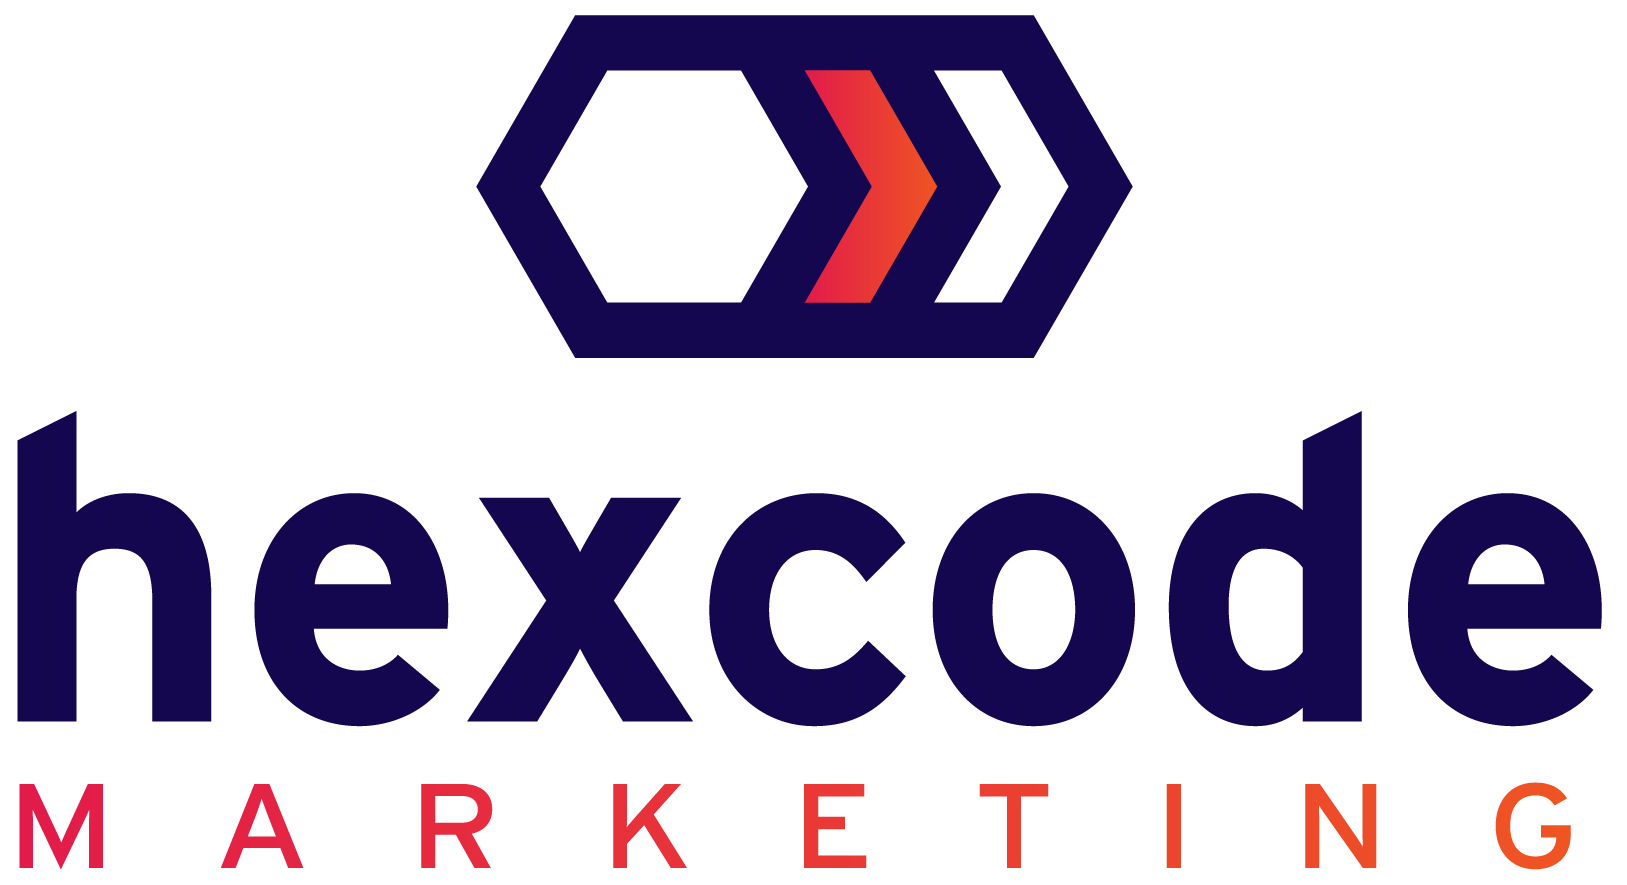 Hexcode-Marketing-Logo_transparent_background.png